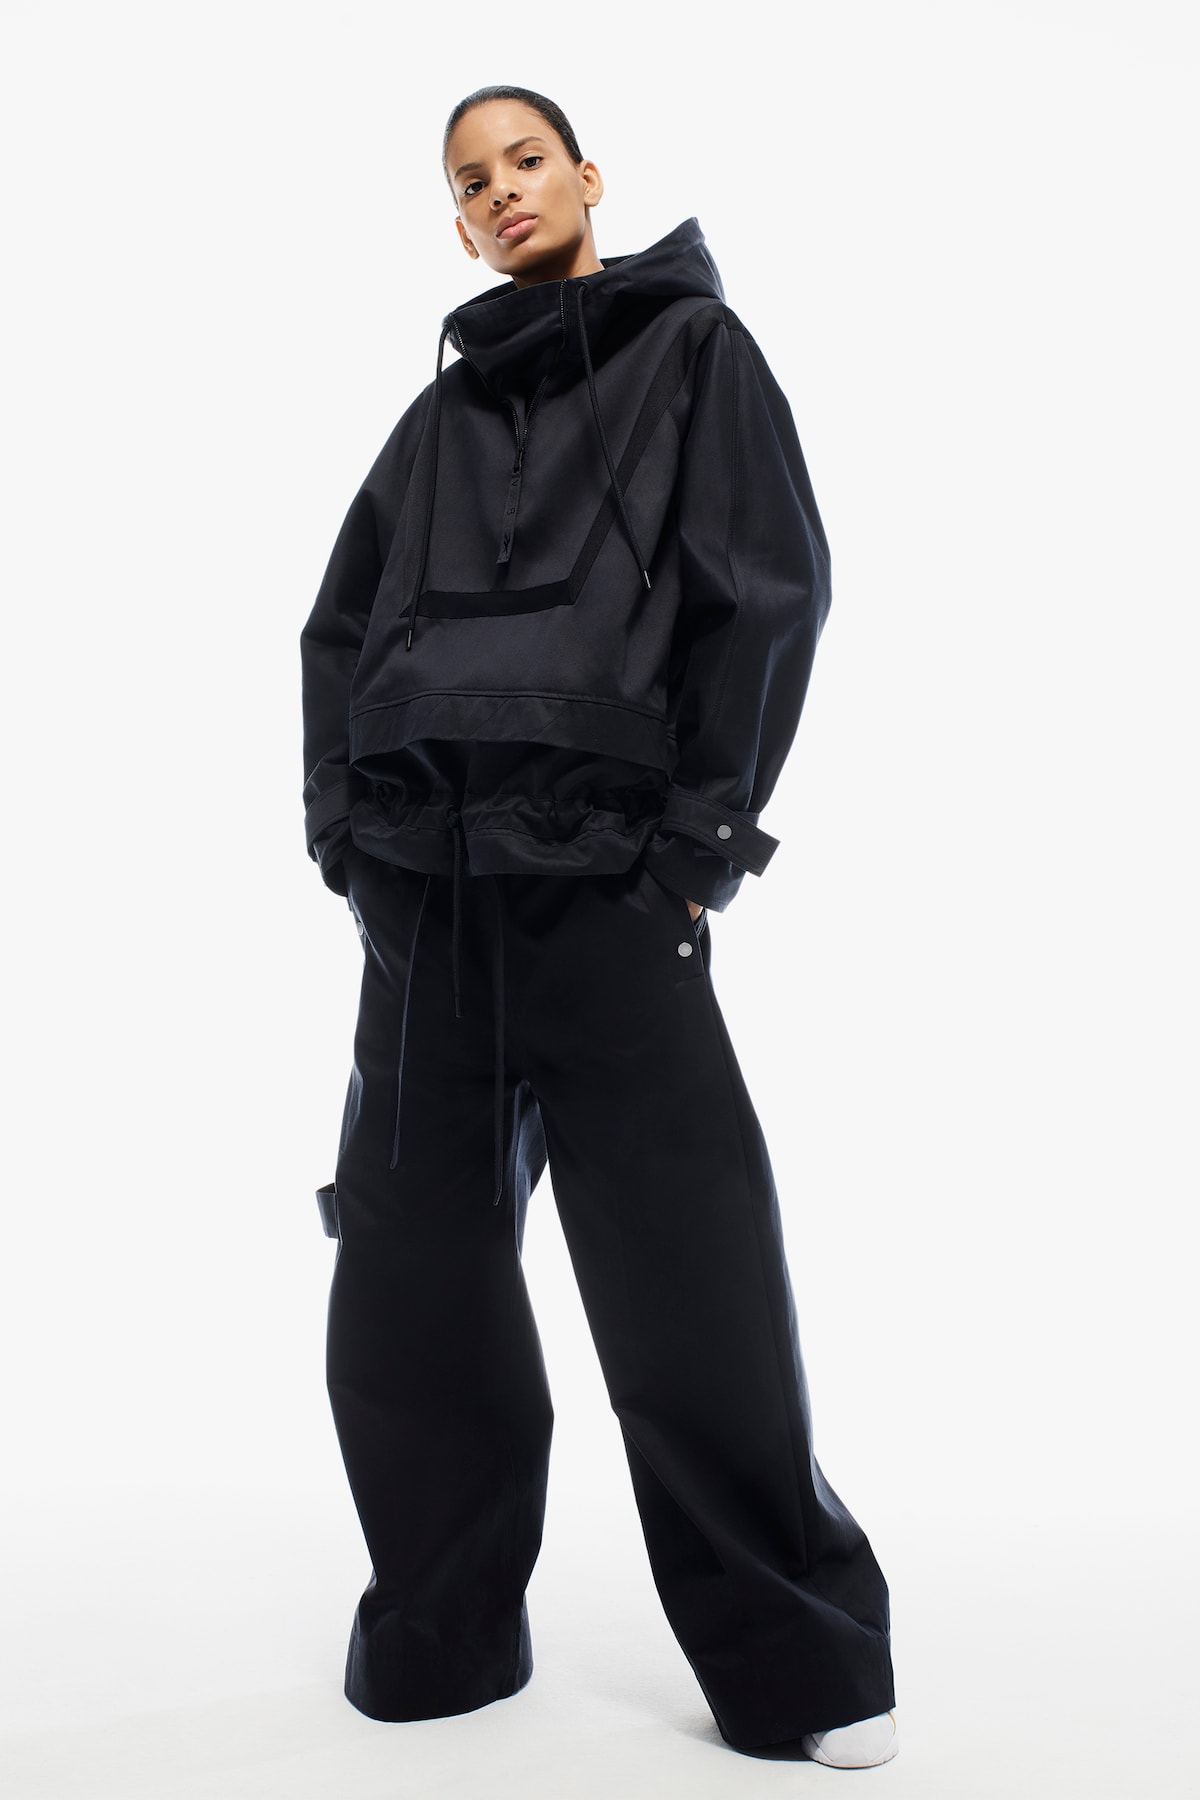 Victoria Beckham x Reebok Collection Drop 2 FW19 Sneaker Lookbook Workout Range Design Inspiration Sportswear 